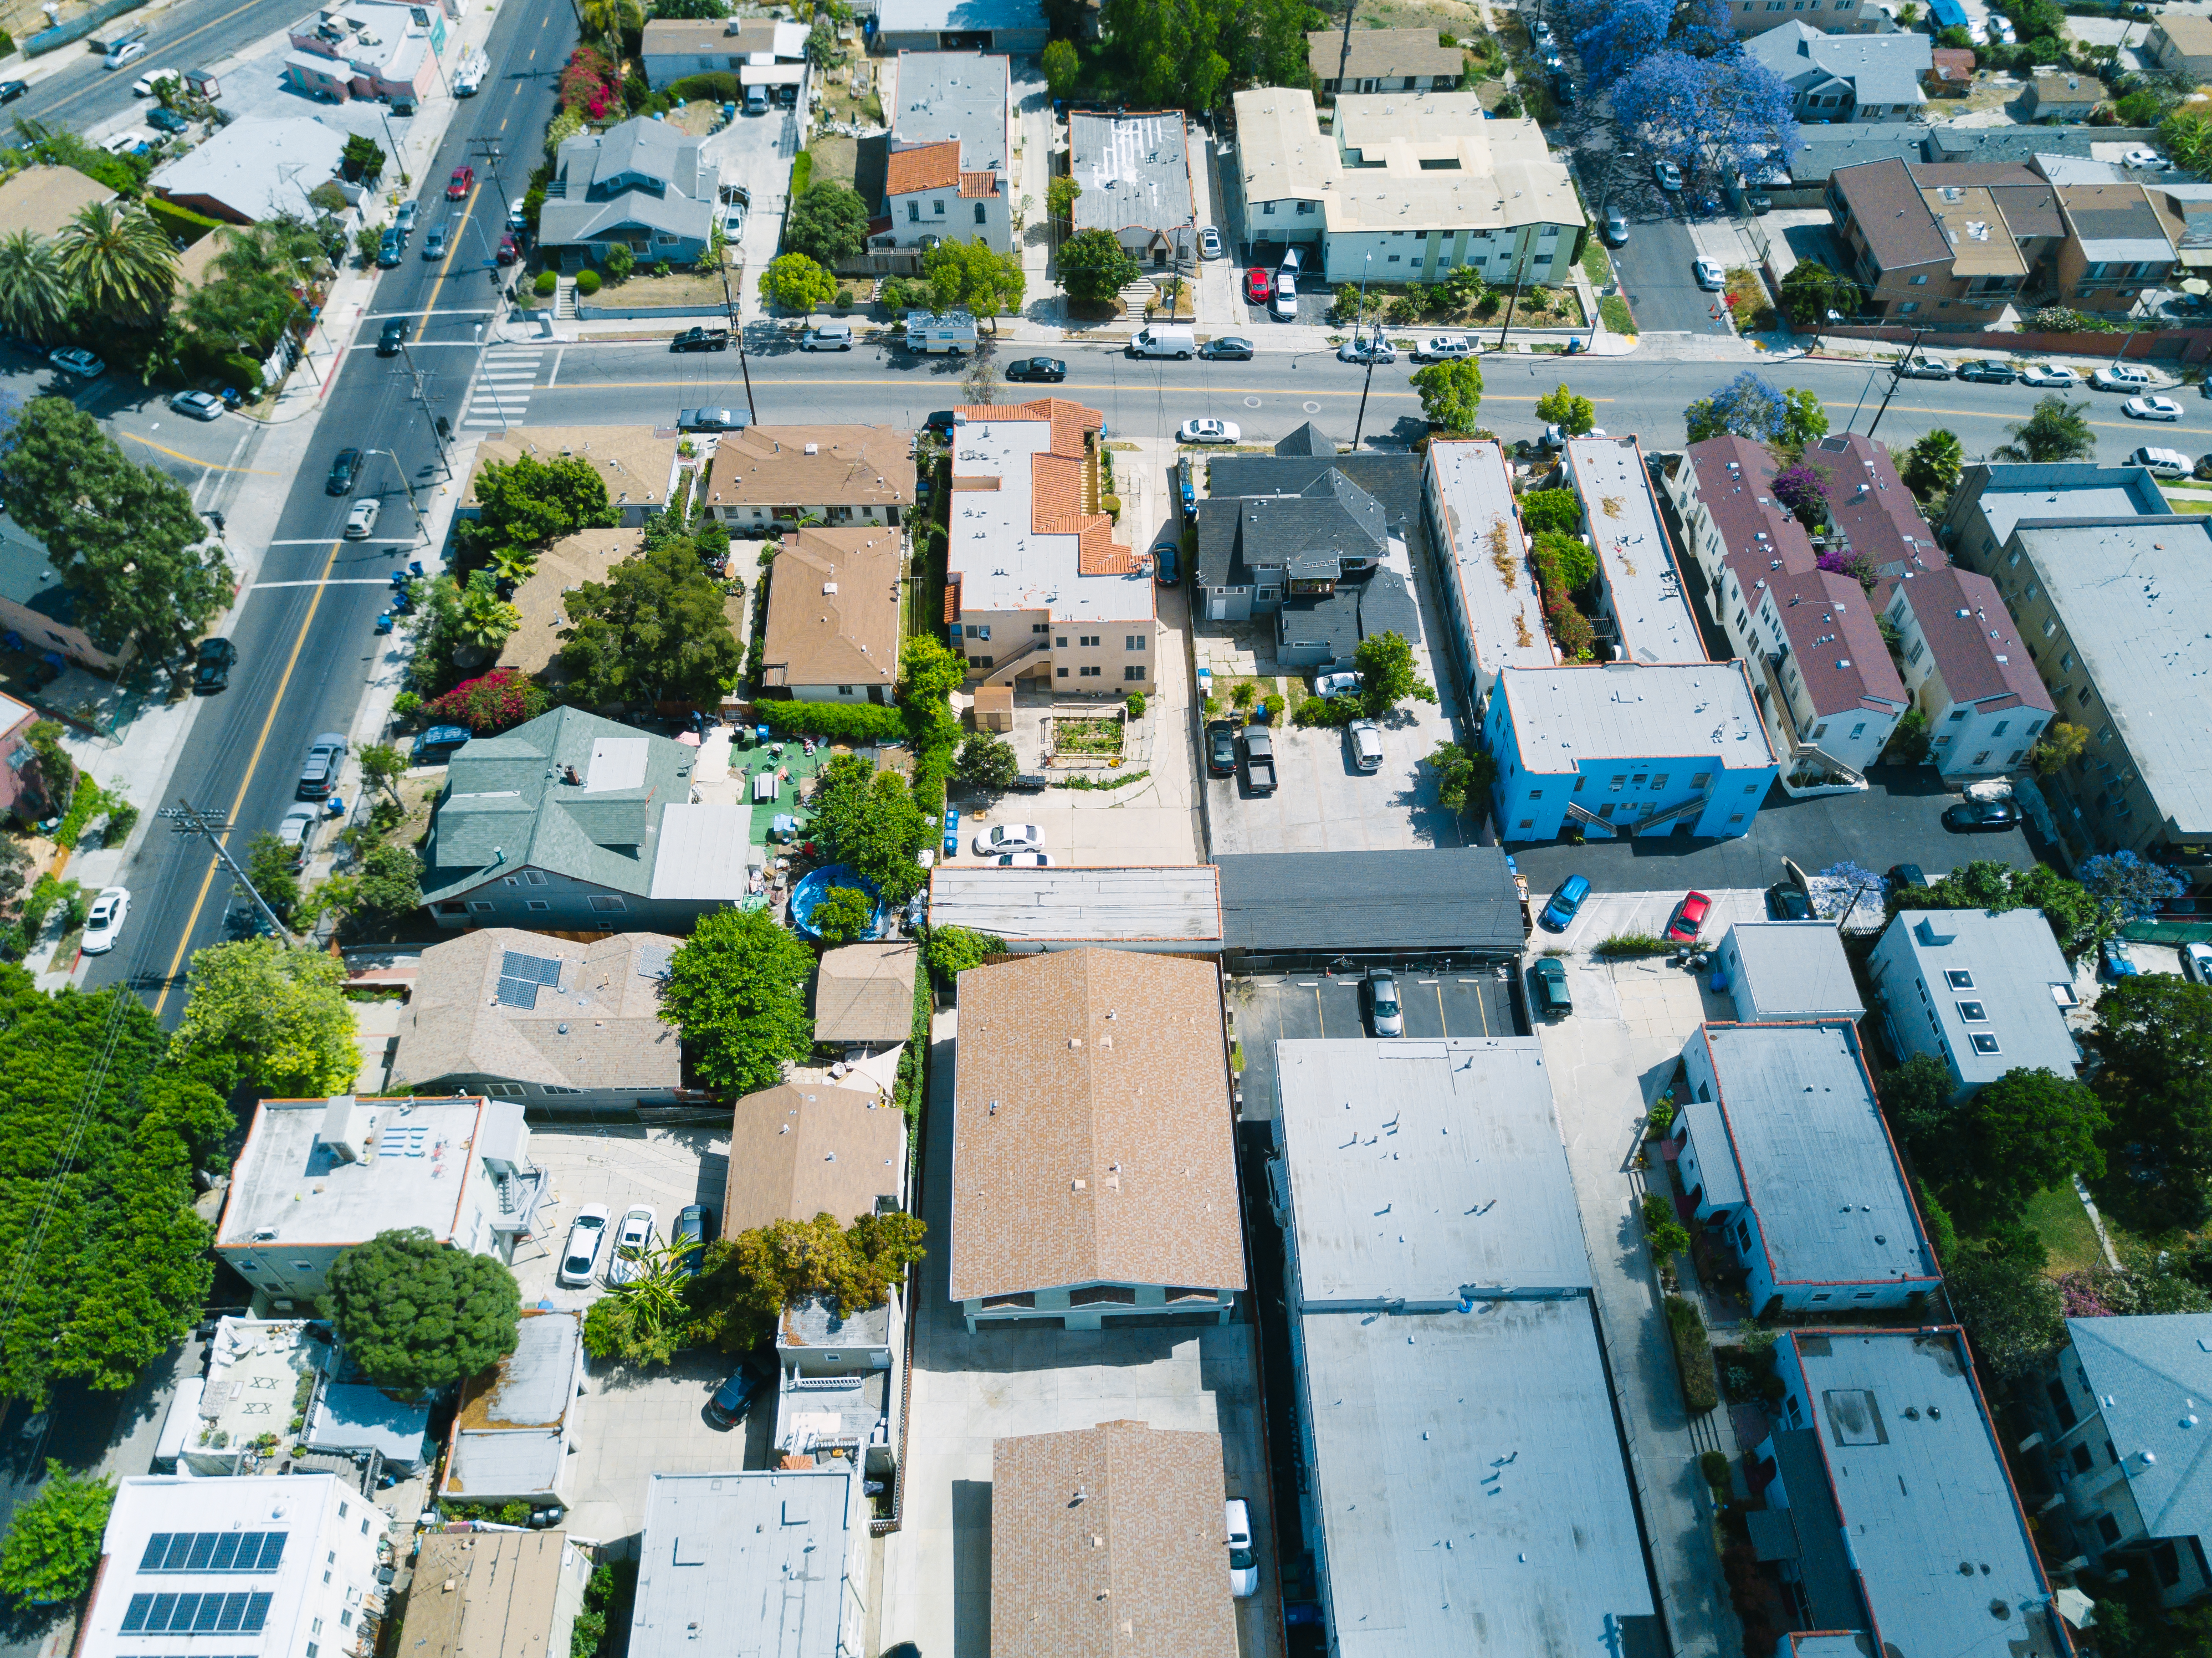 Aerial image of building rooftops in a residential neighborhood.